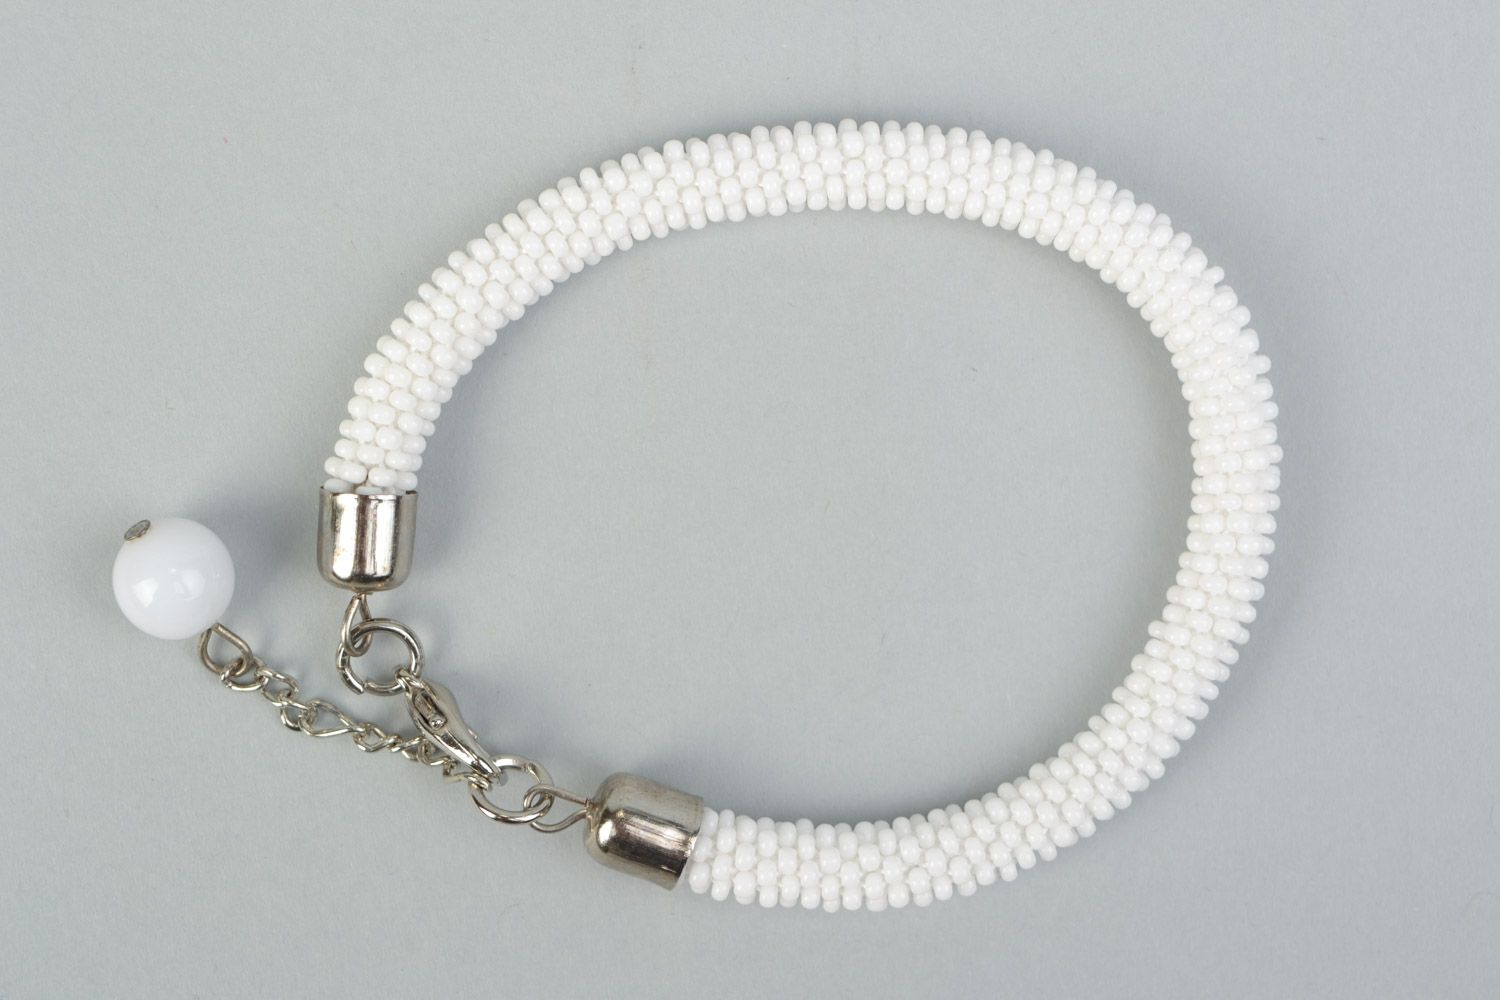 Handmade festive wrist cord bracelet crocheted of Czech beads in white color photo 2